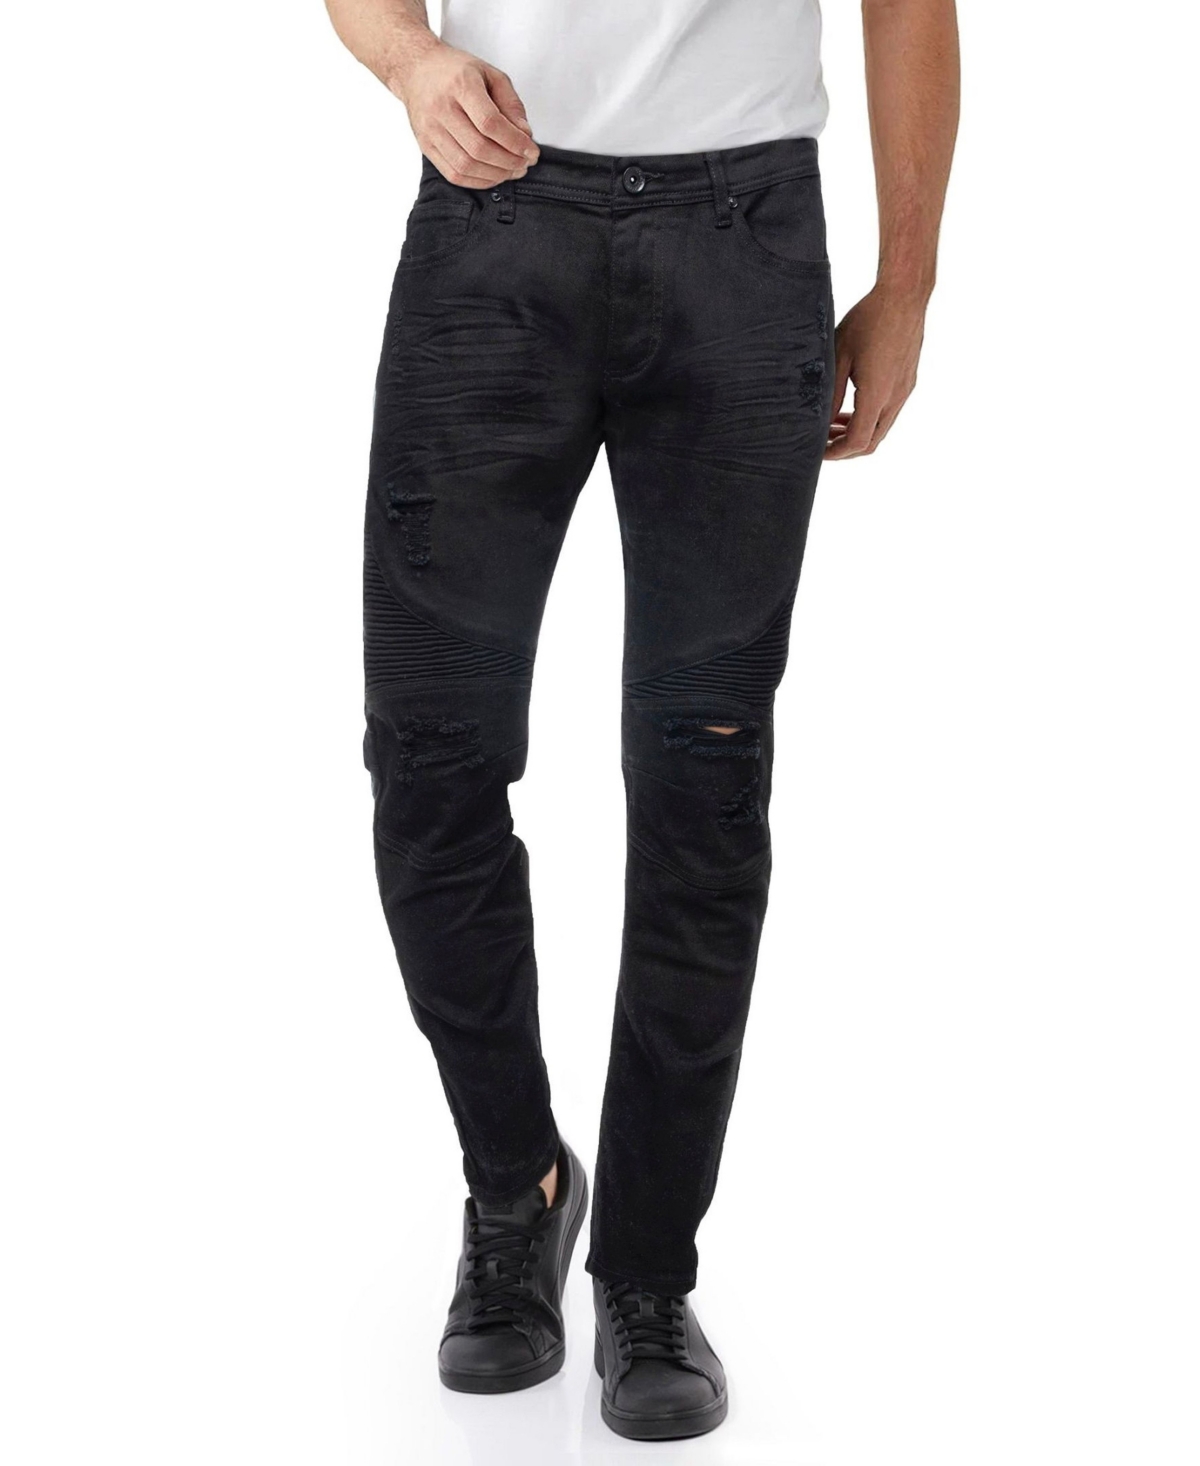 Men's Stretch Moto Jeans - Black